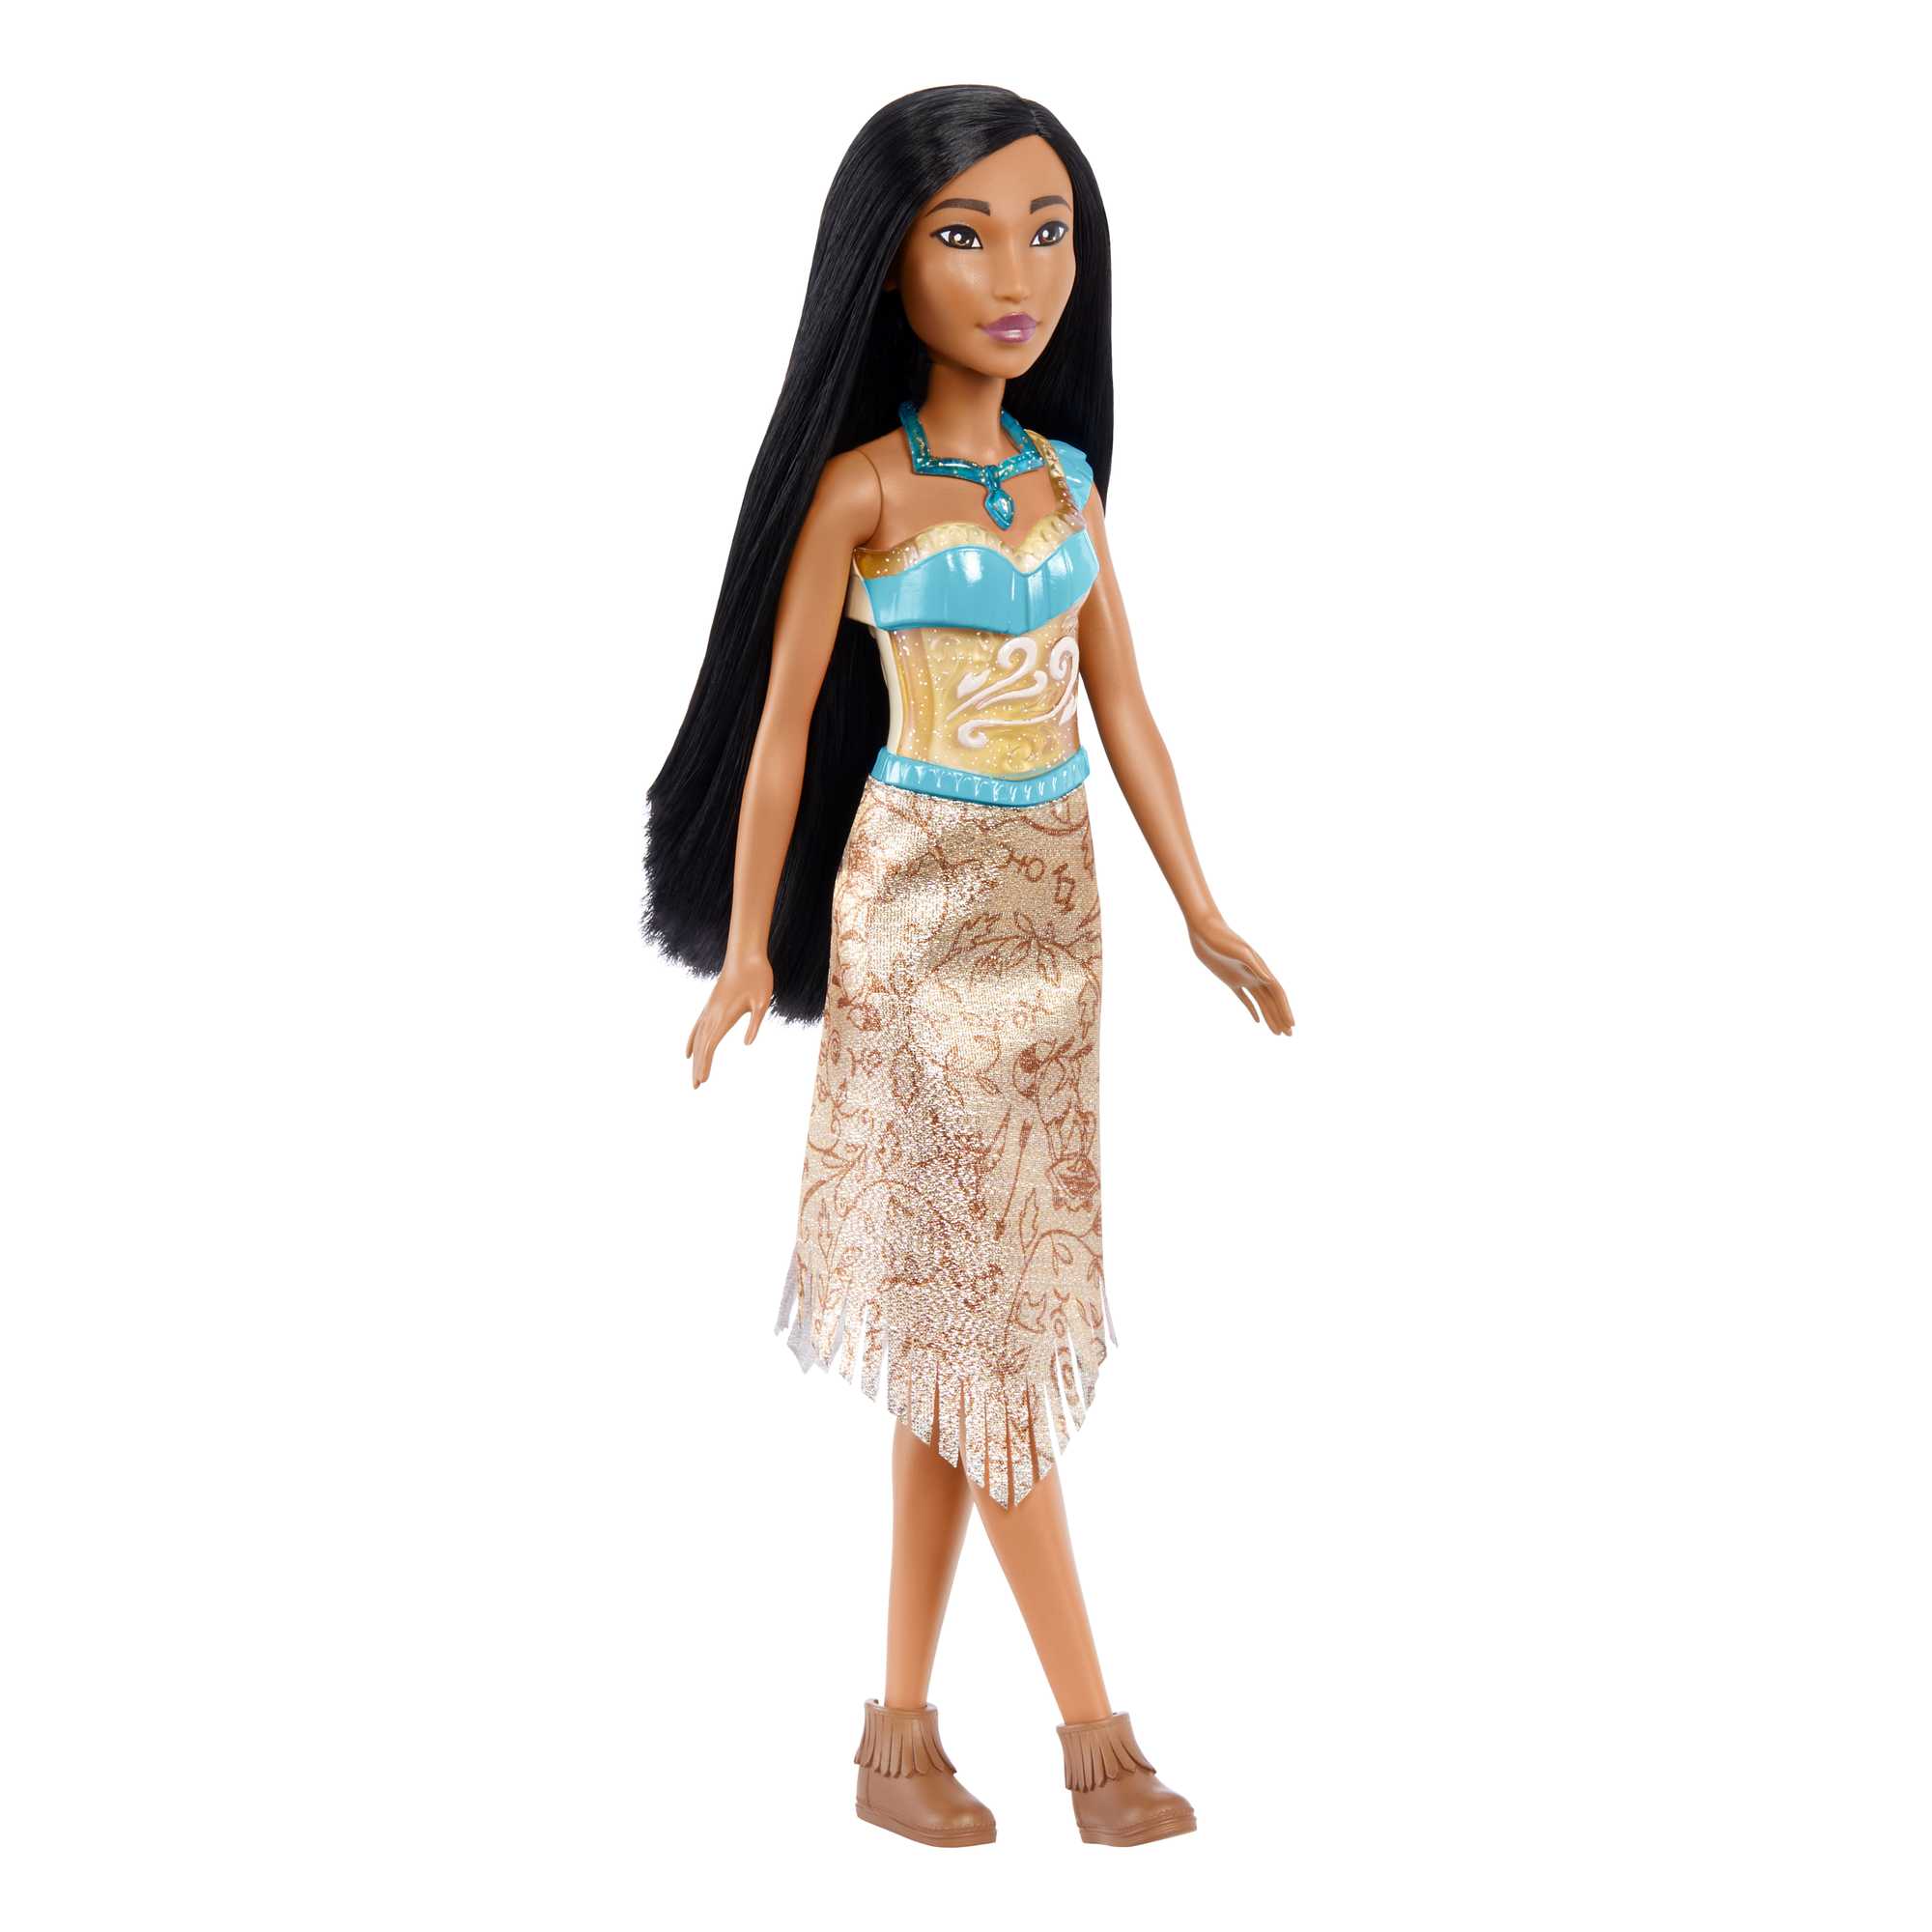 Disney Princess Toys, Pocahontas Fashion Doll and Accessories | Mattel